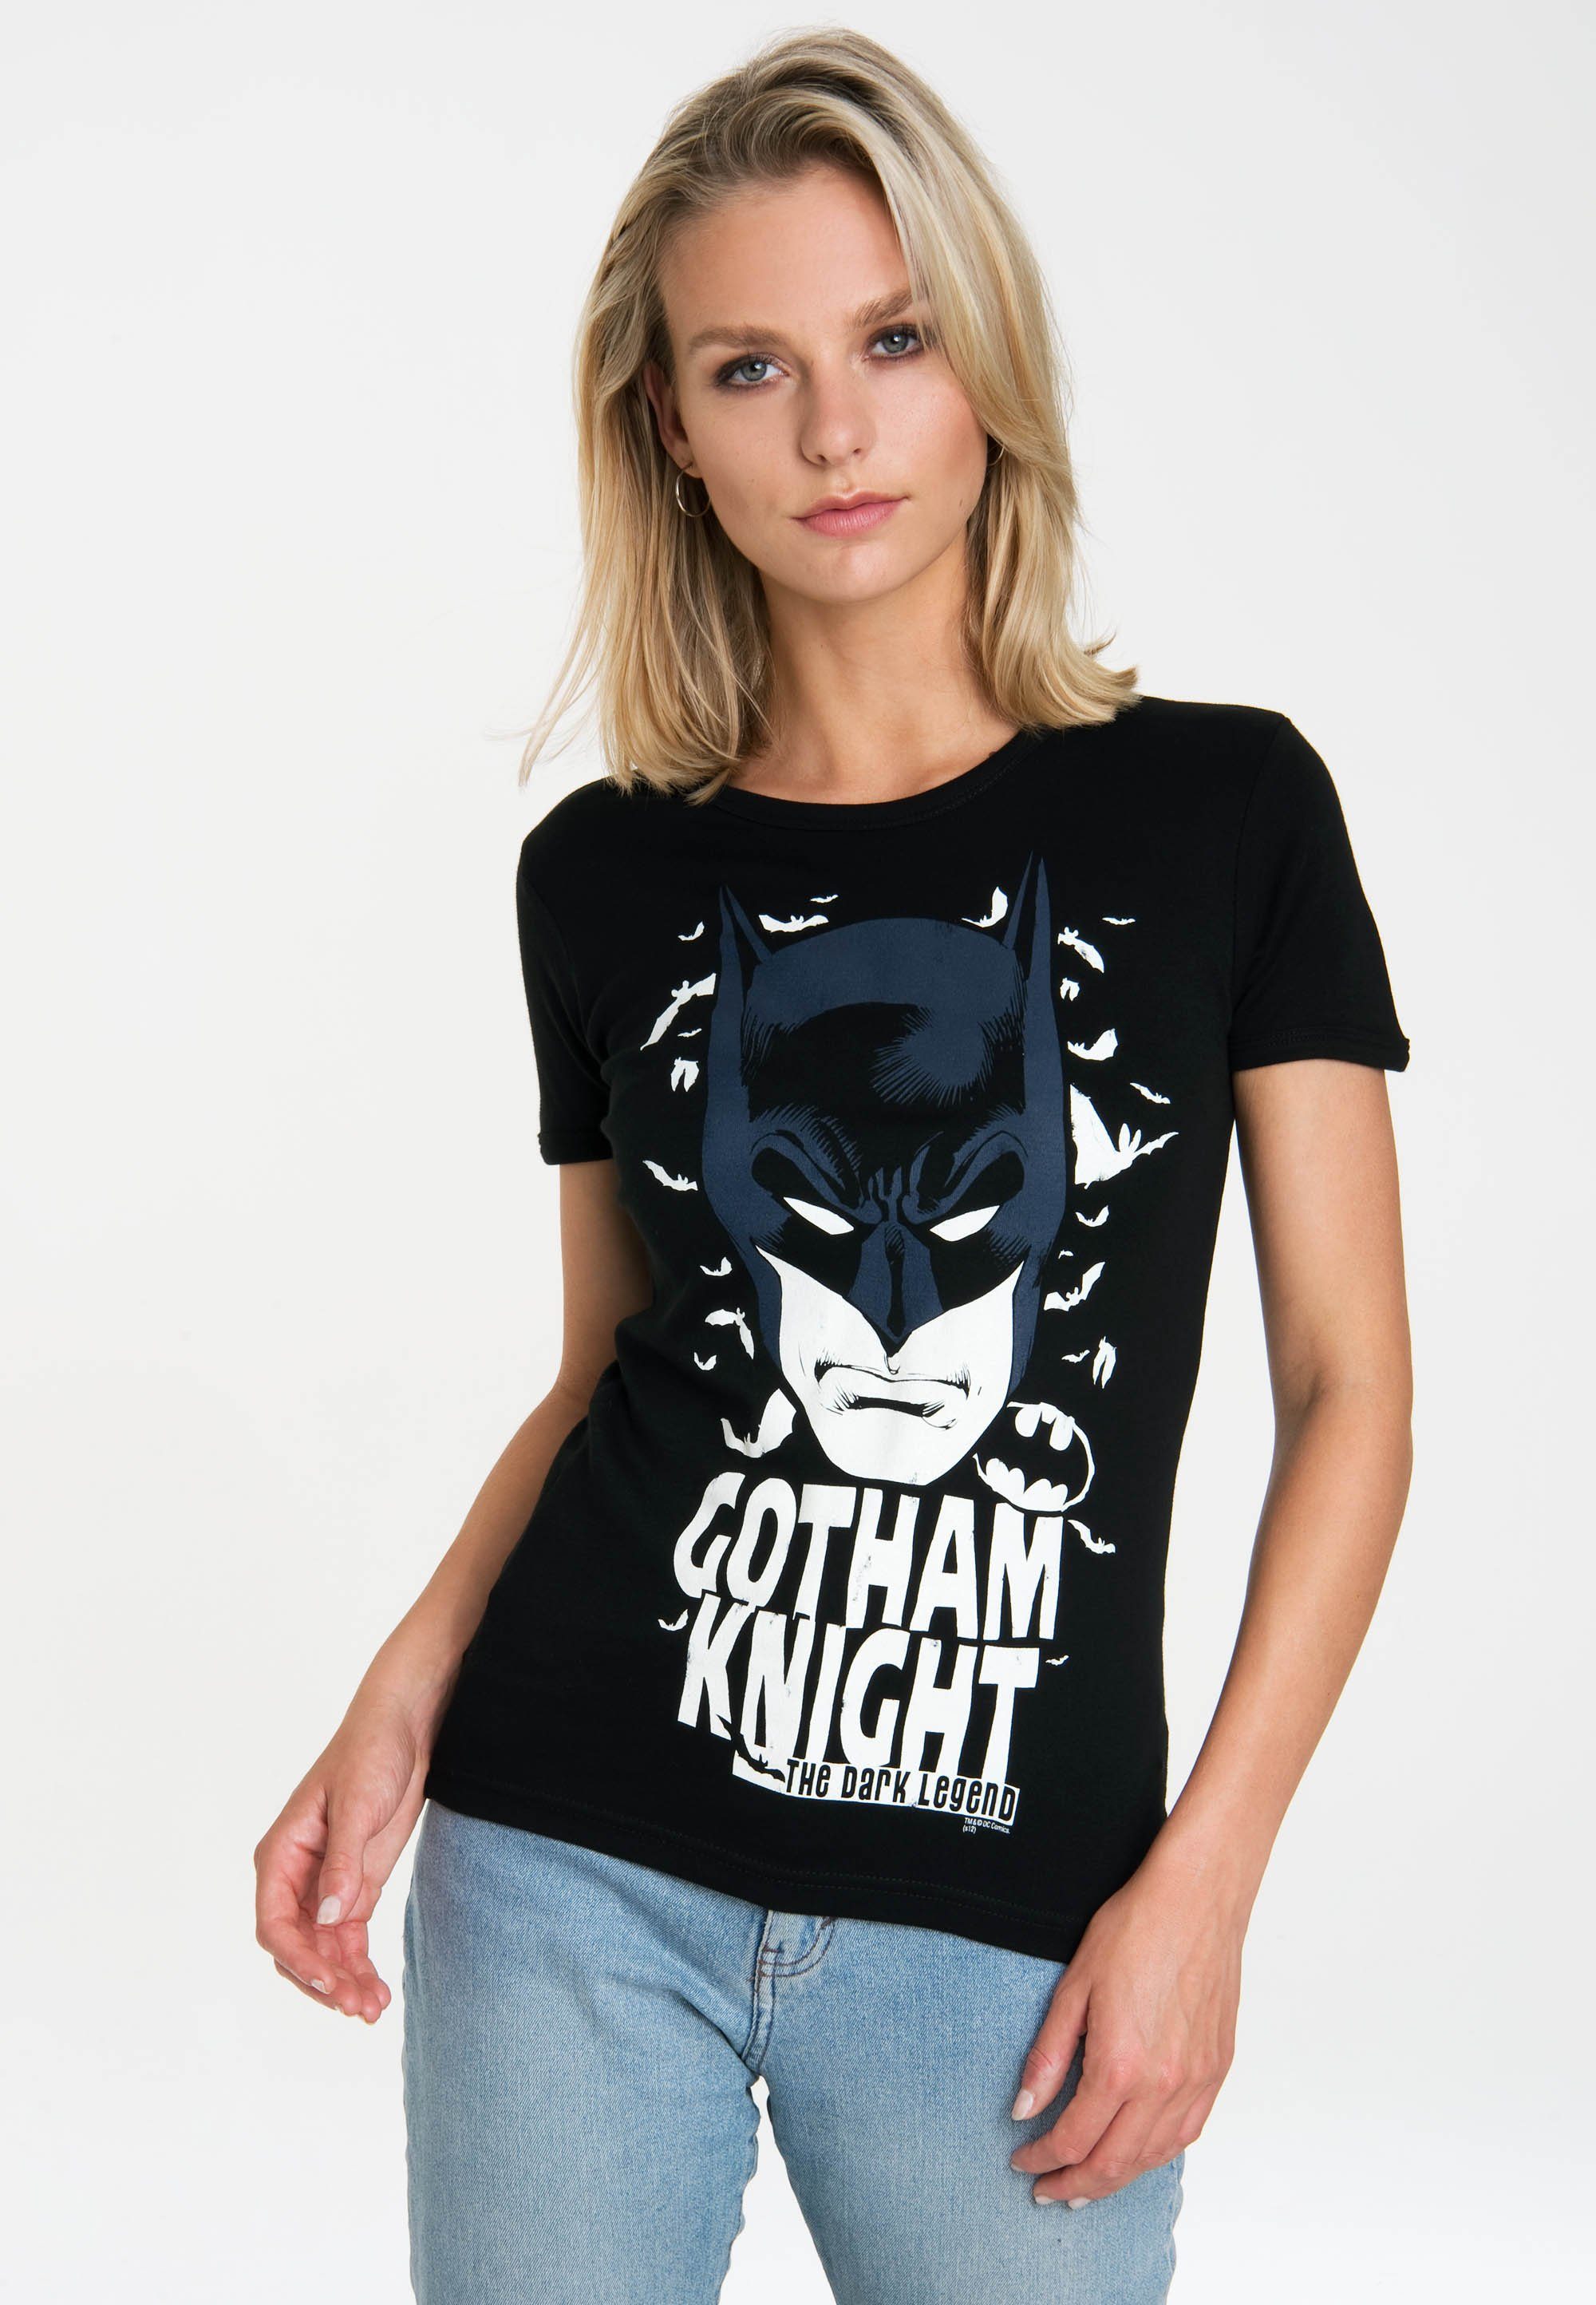 Knight lizenziertem - LOGOSHIRT mit Batman T-Shirt Originaldesign Gotham